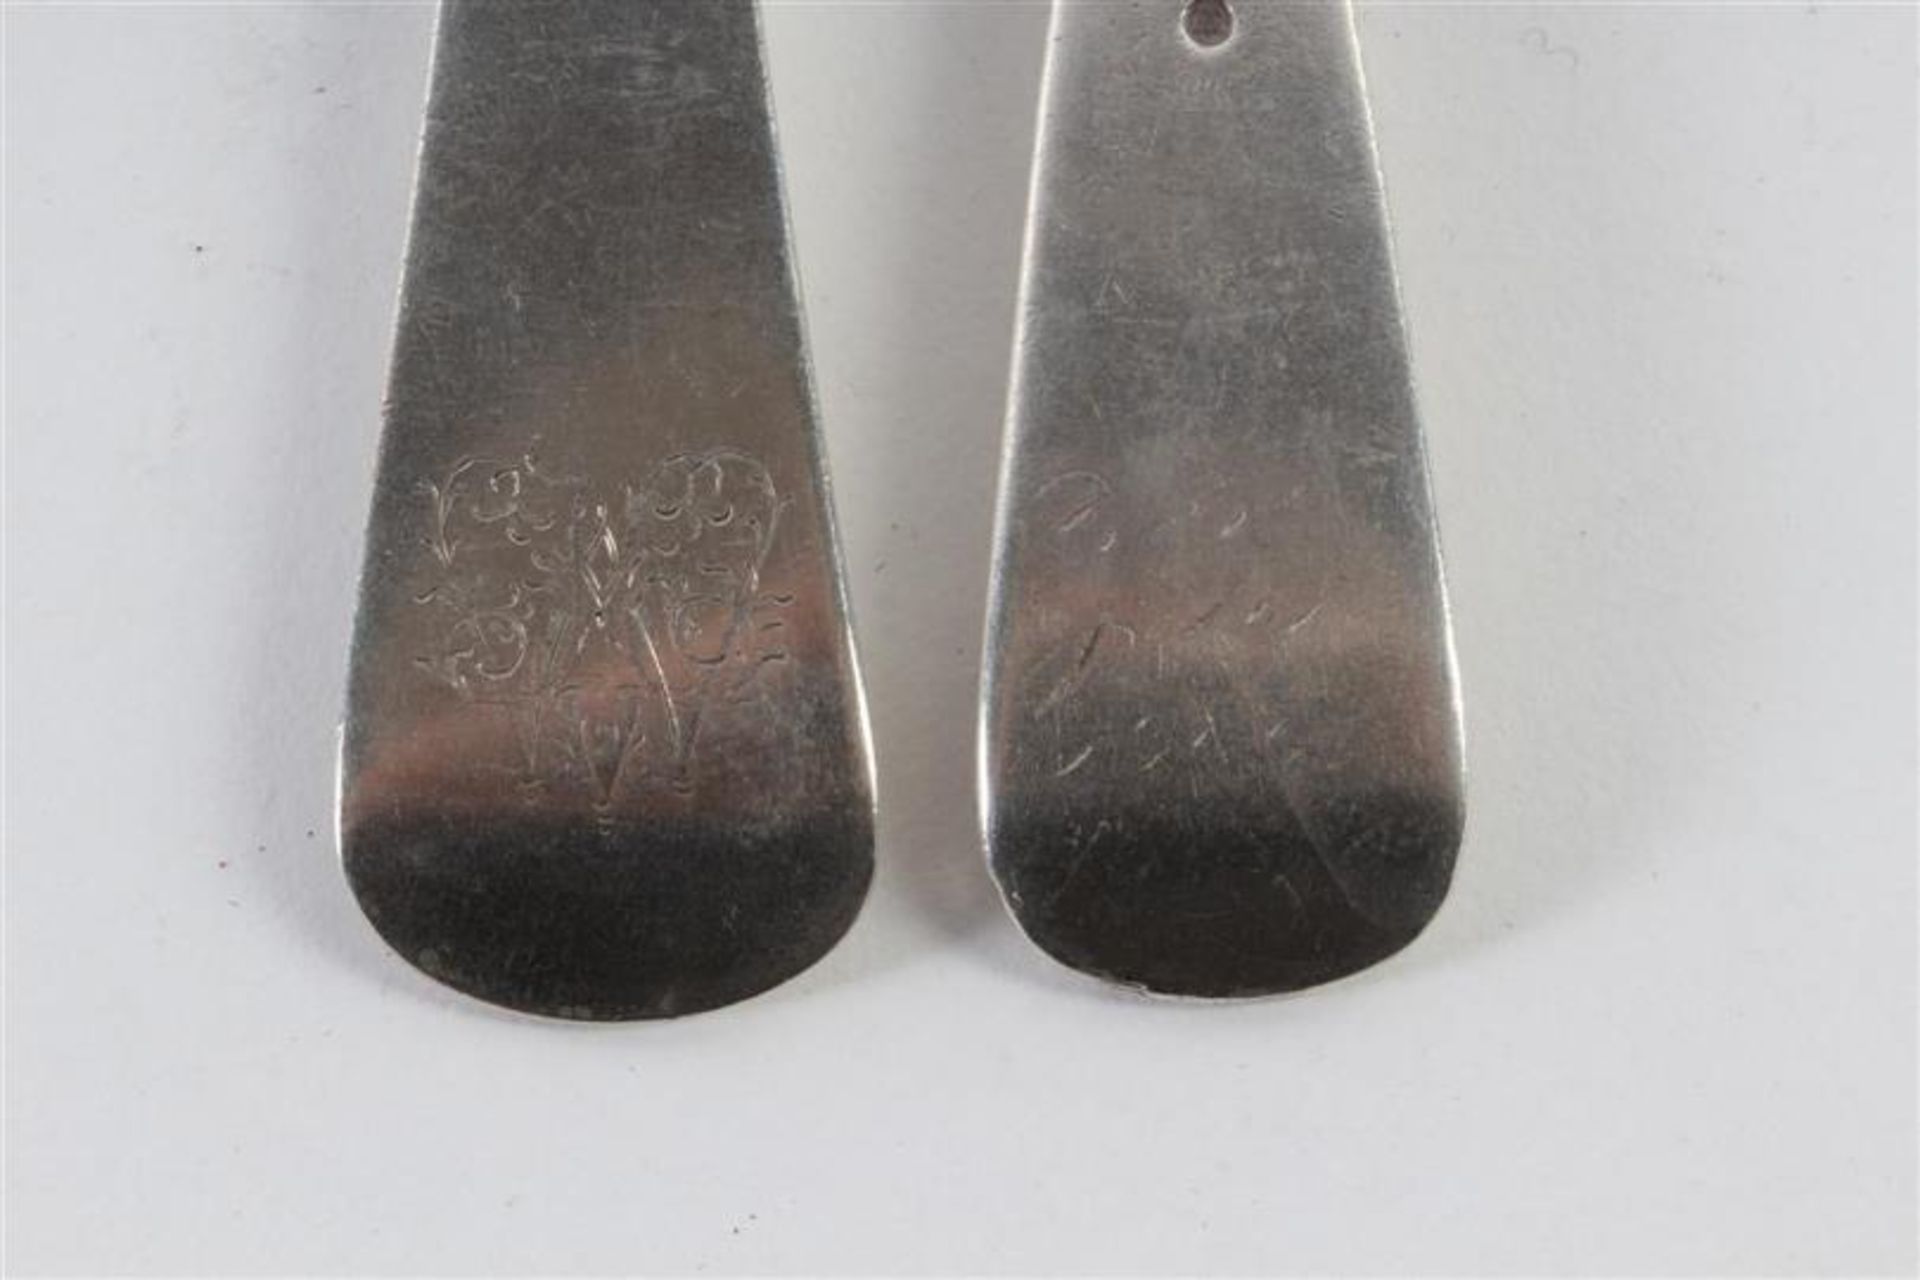 Zeven zilveren couverts, Hollands gekeurd, 2e gehalte, diverse keuren. Gewicht: 688 g. - Bild 6 aus 6